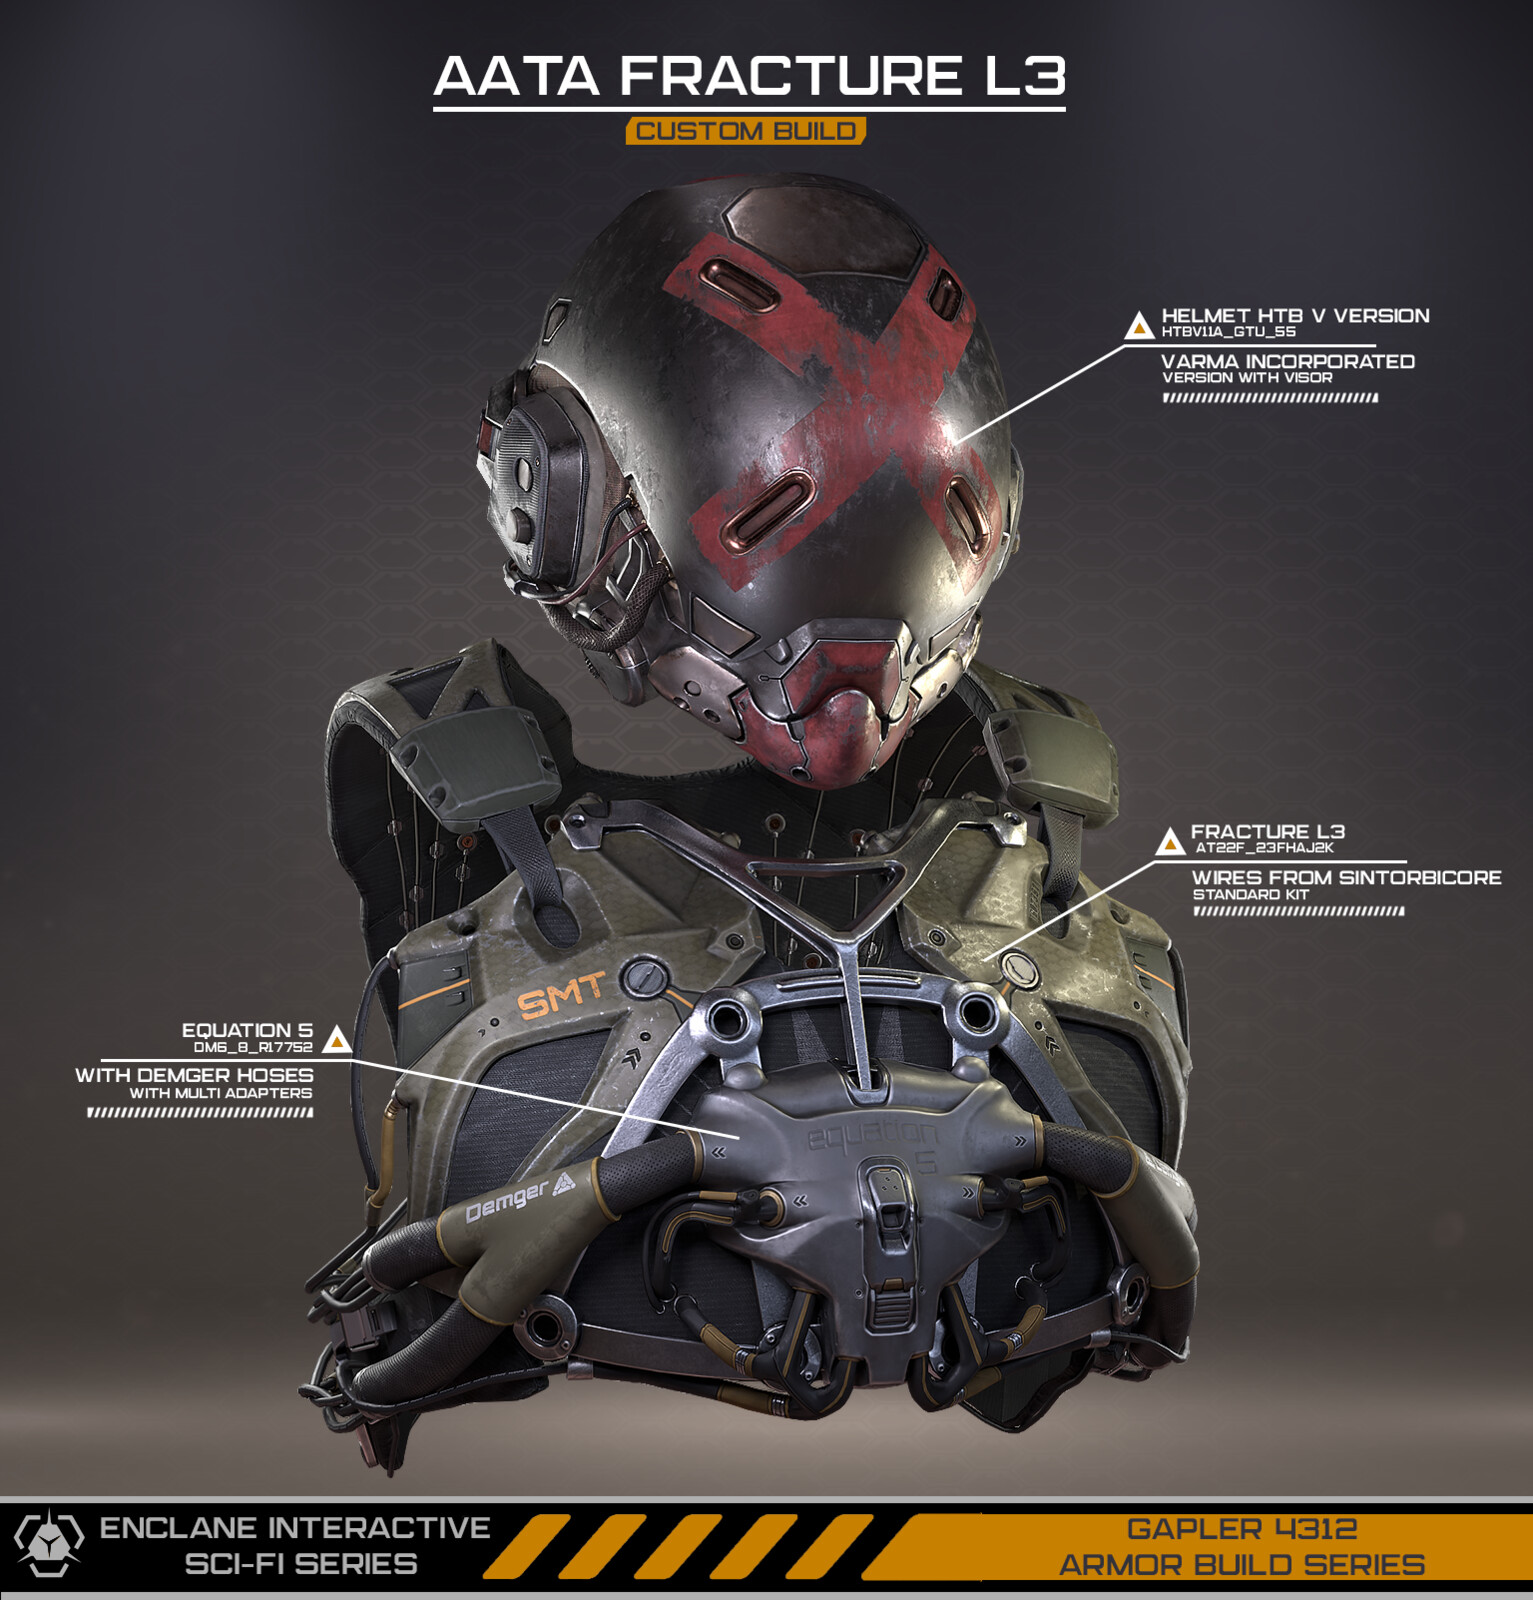 AATA custom build  with helmet Front view